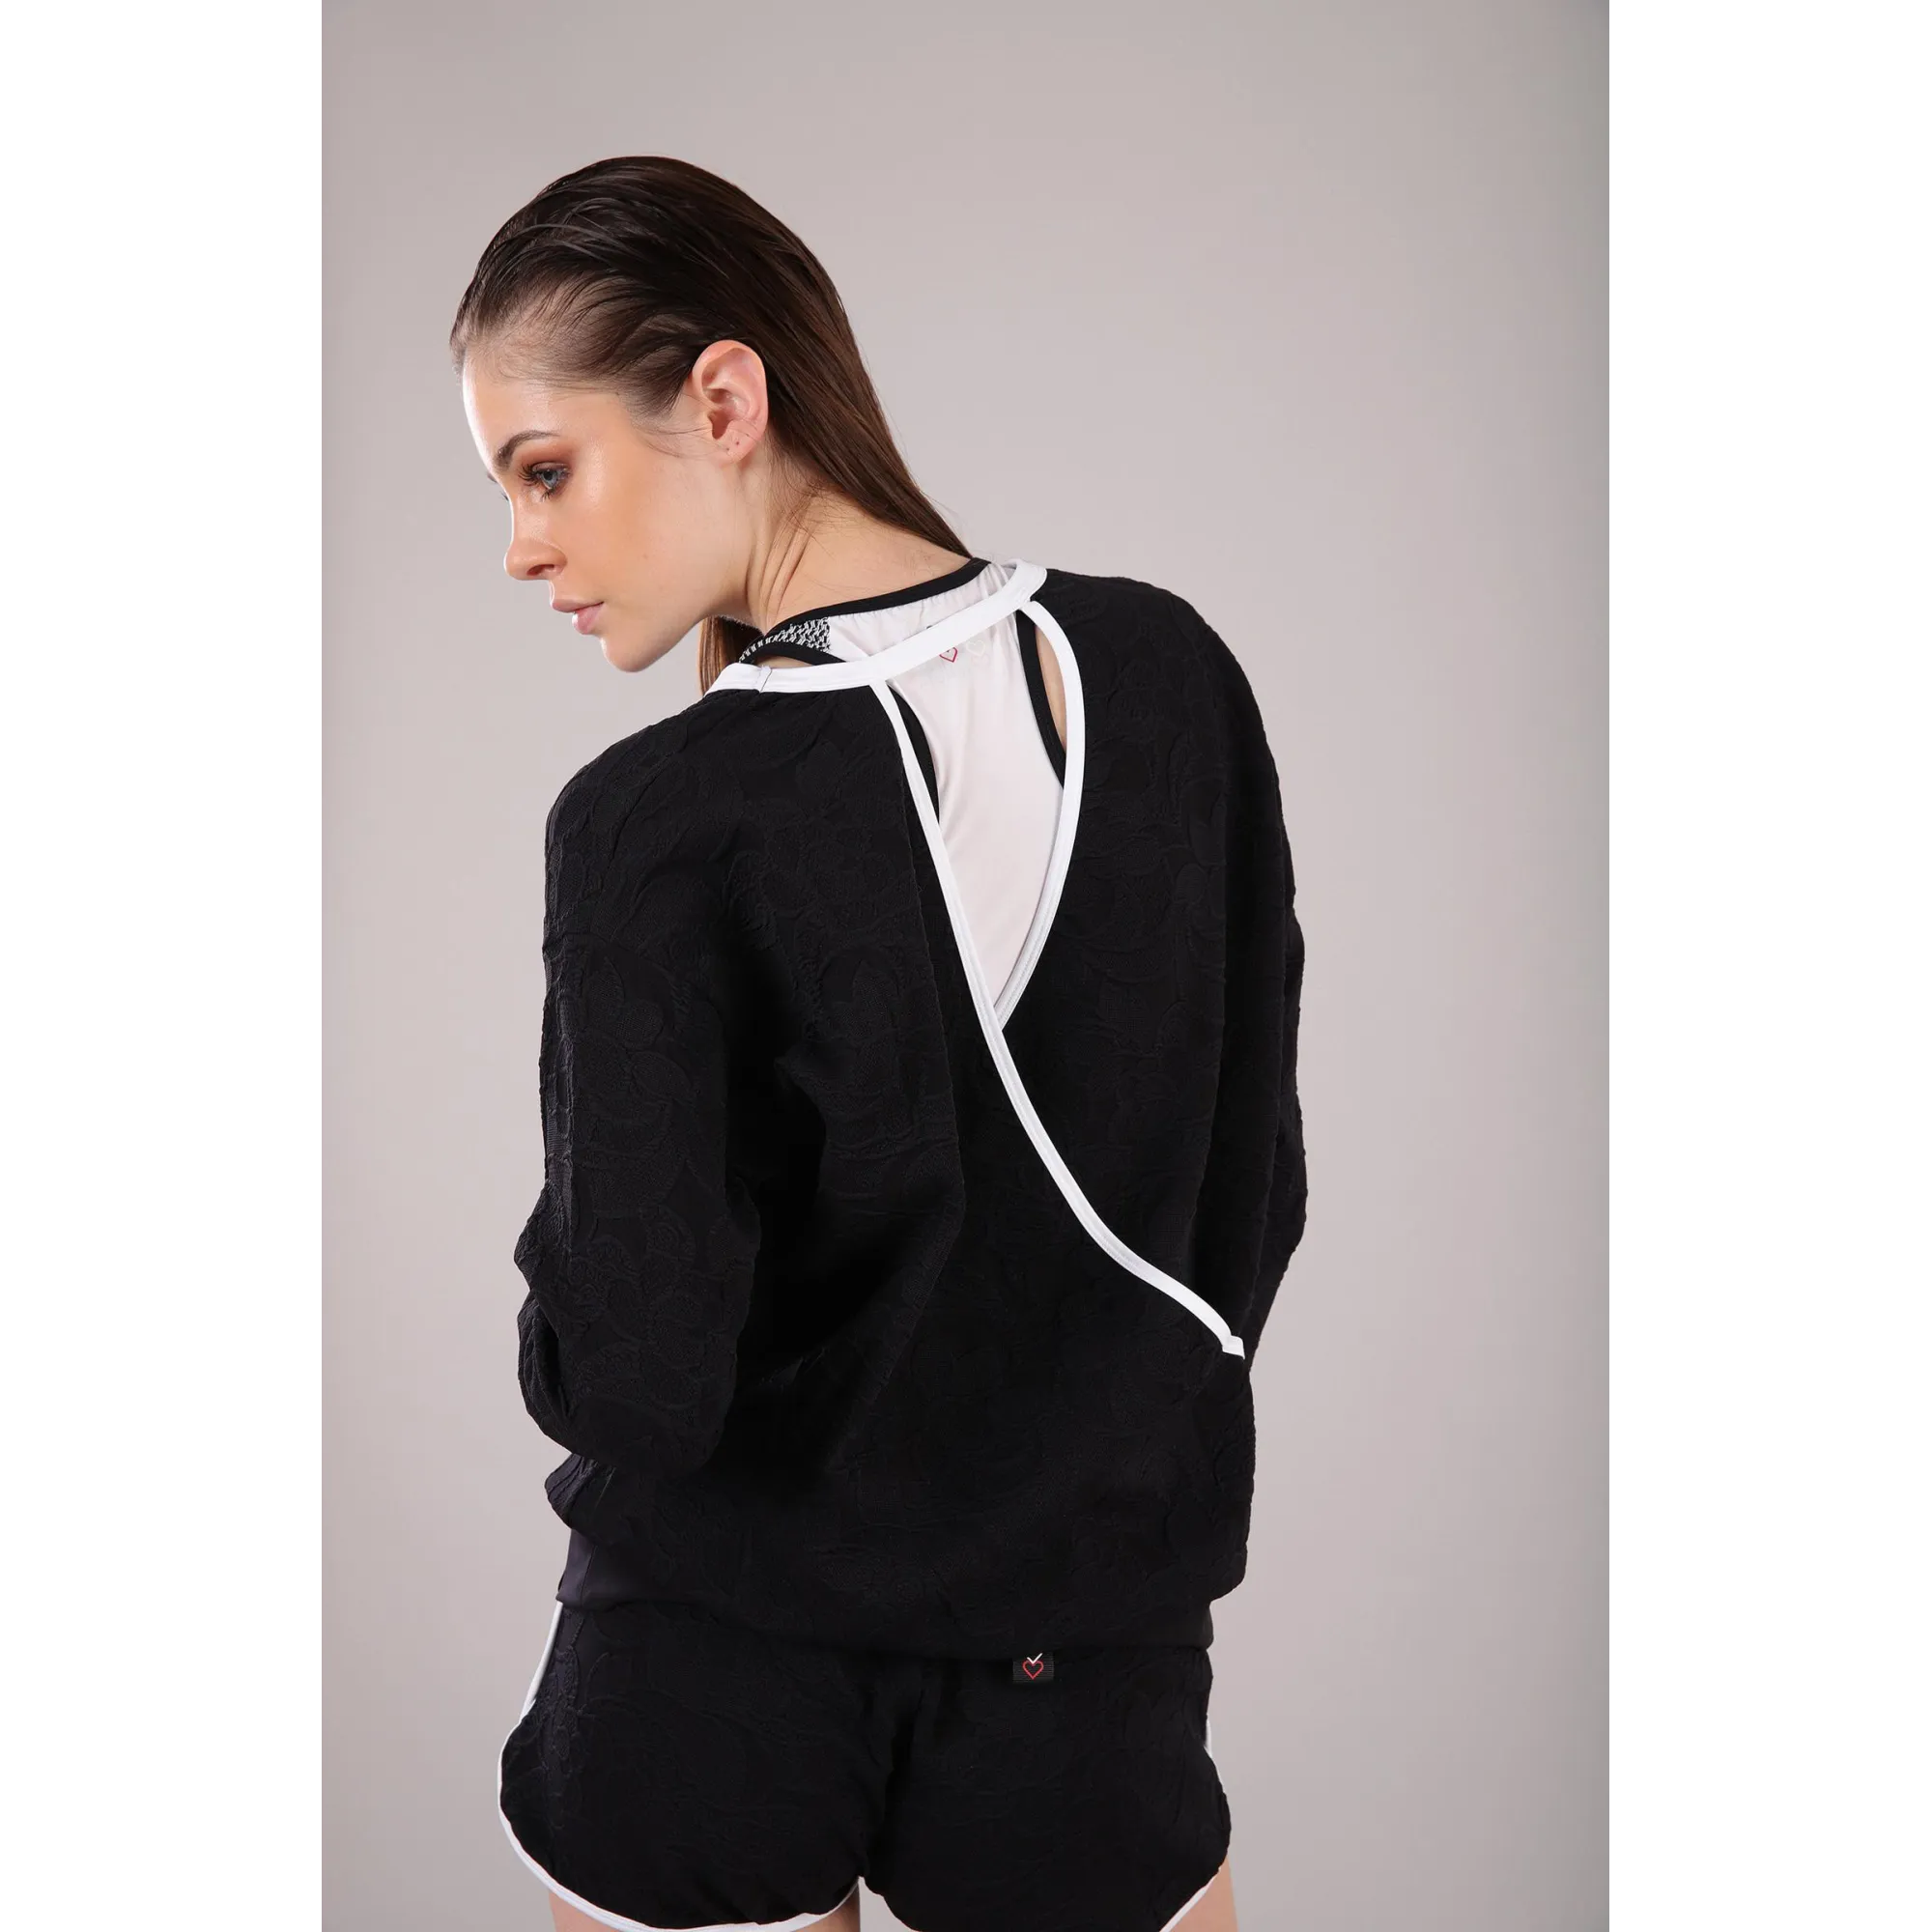 Freddy Yoga Jacquard-Shirt - V-Ausschnitt am Rücken - Made in Italy - Black - White - NW0